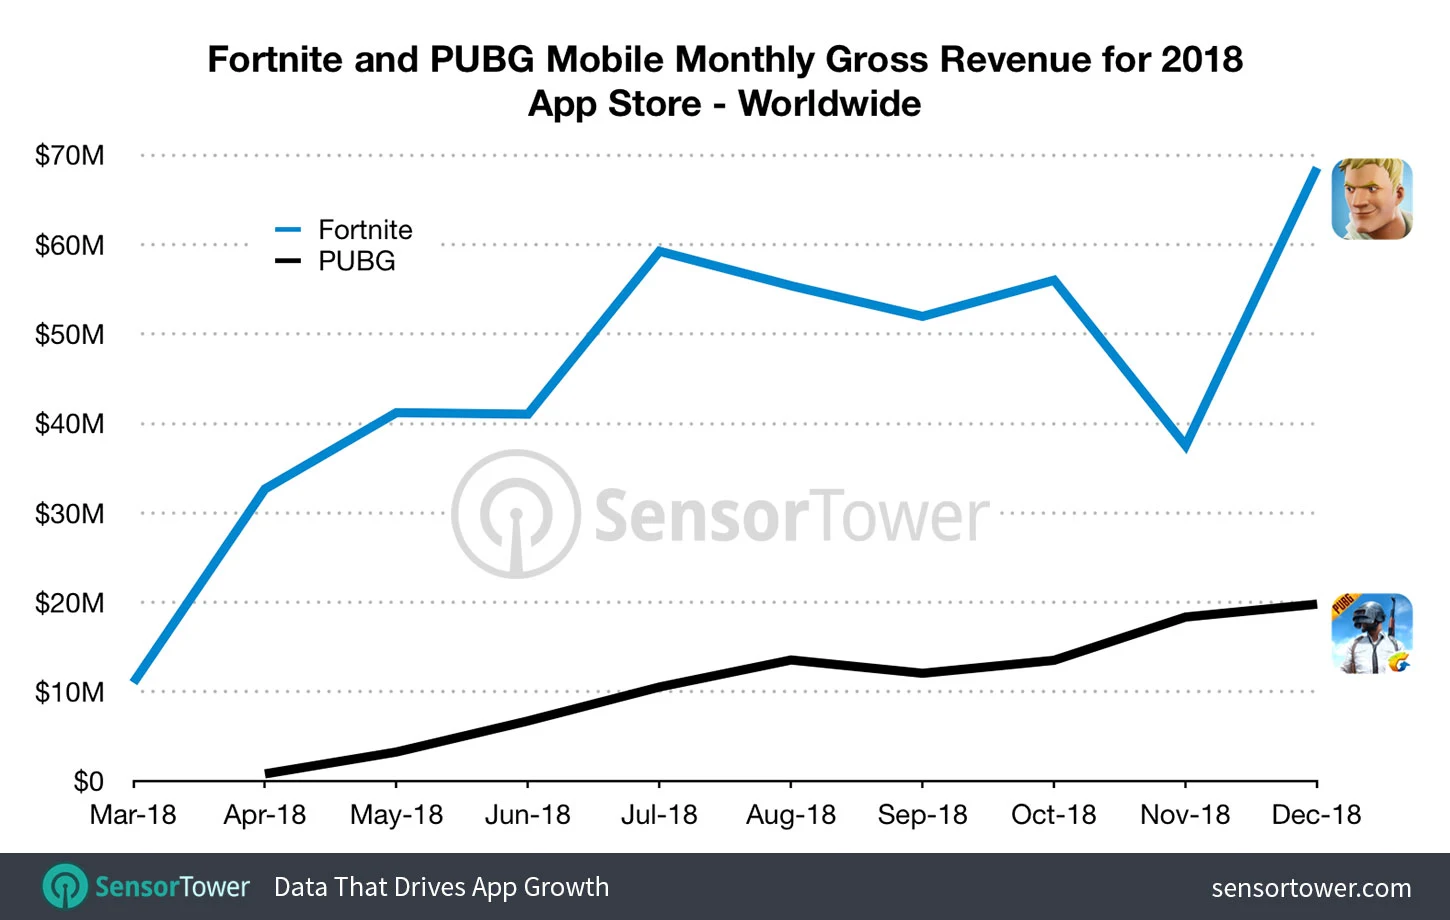 Fortnite Grossed Nearly Half a Billion Dollars Last Year on iOS